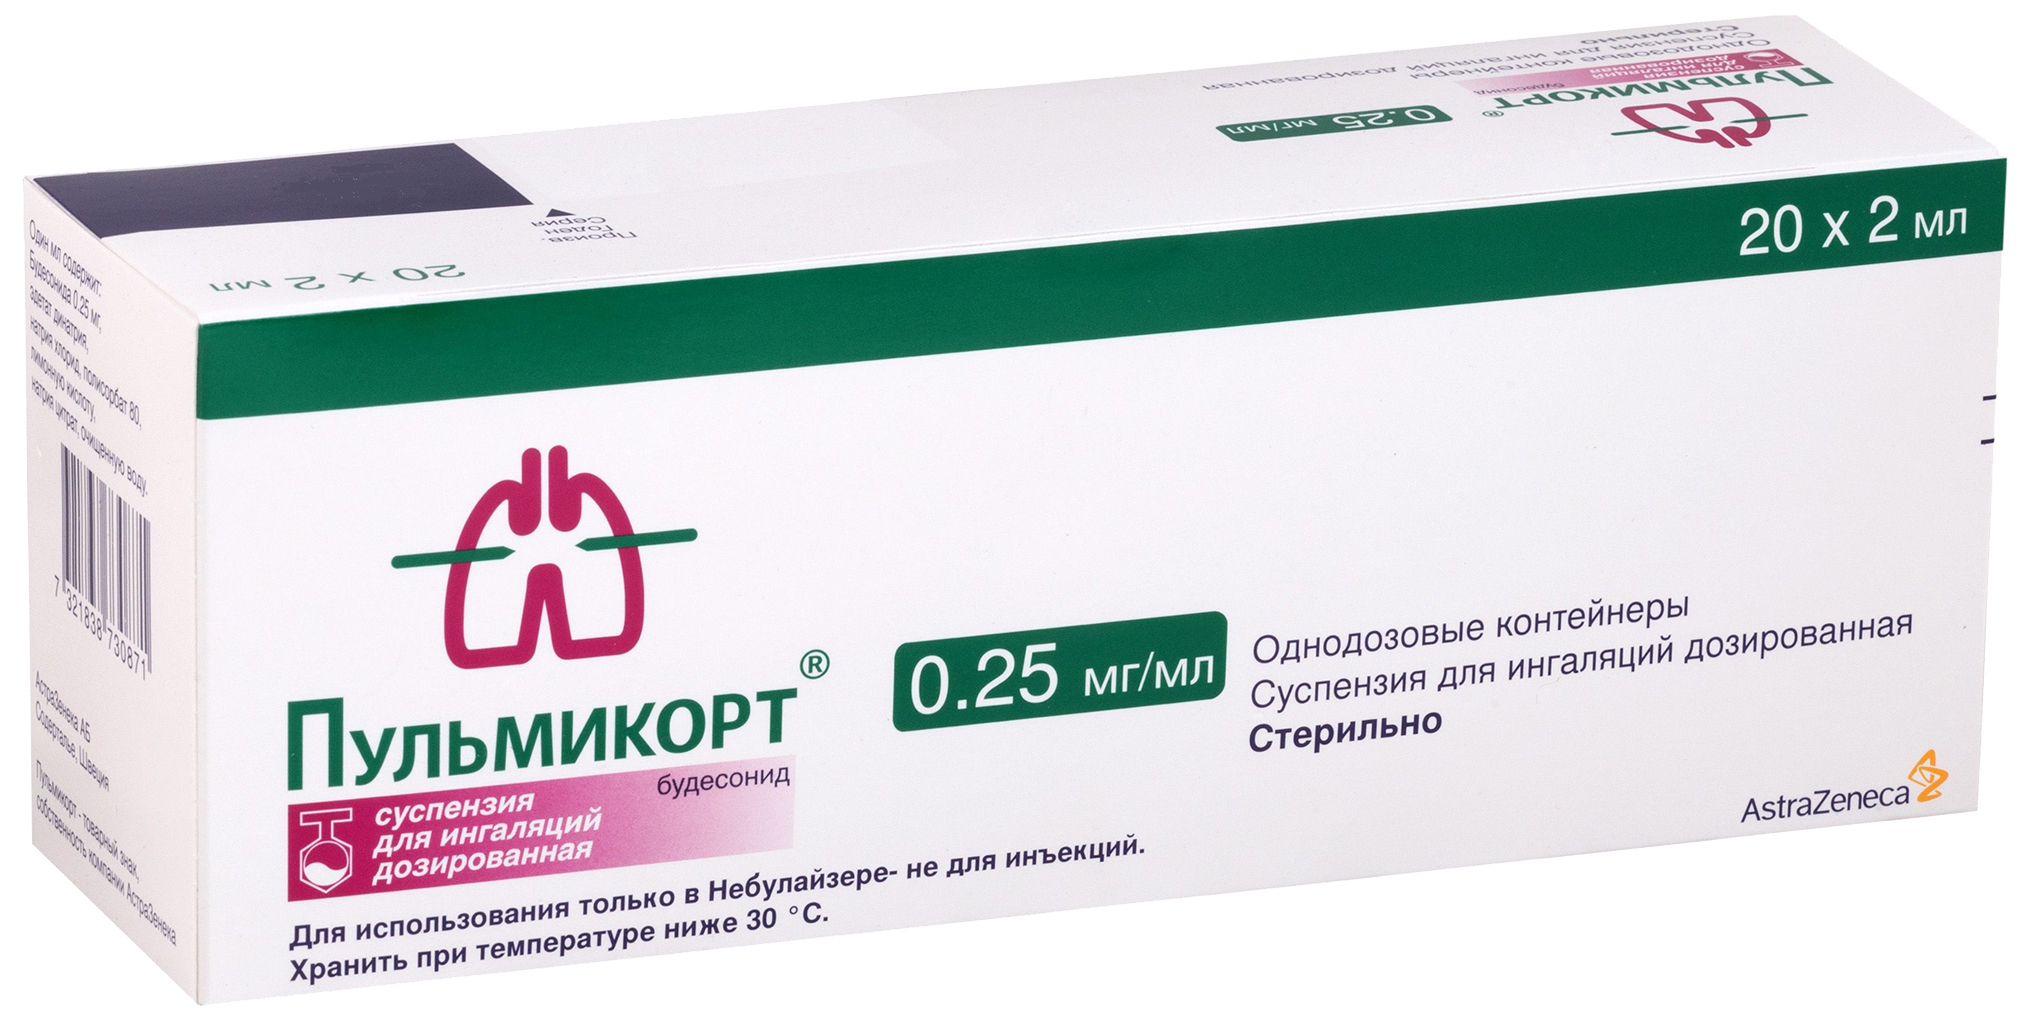 Купить Пульмикорт сусп. для инг.доз.0, 25 мг/мл контейнер 2 мл №20, AstraZeneca, Швеция